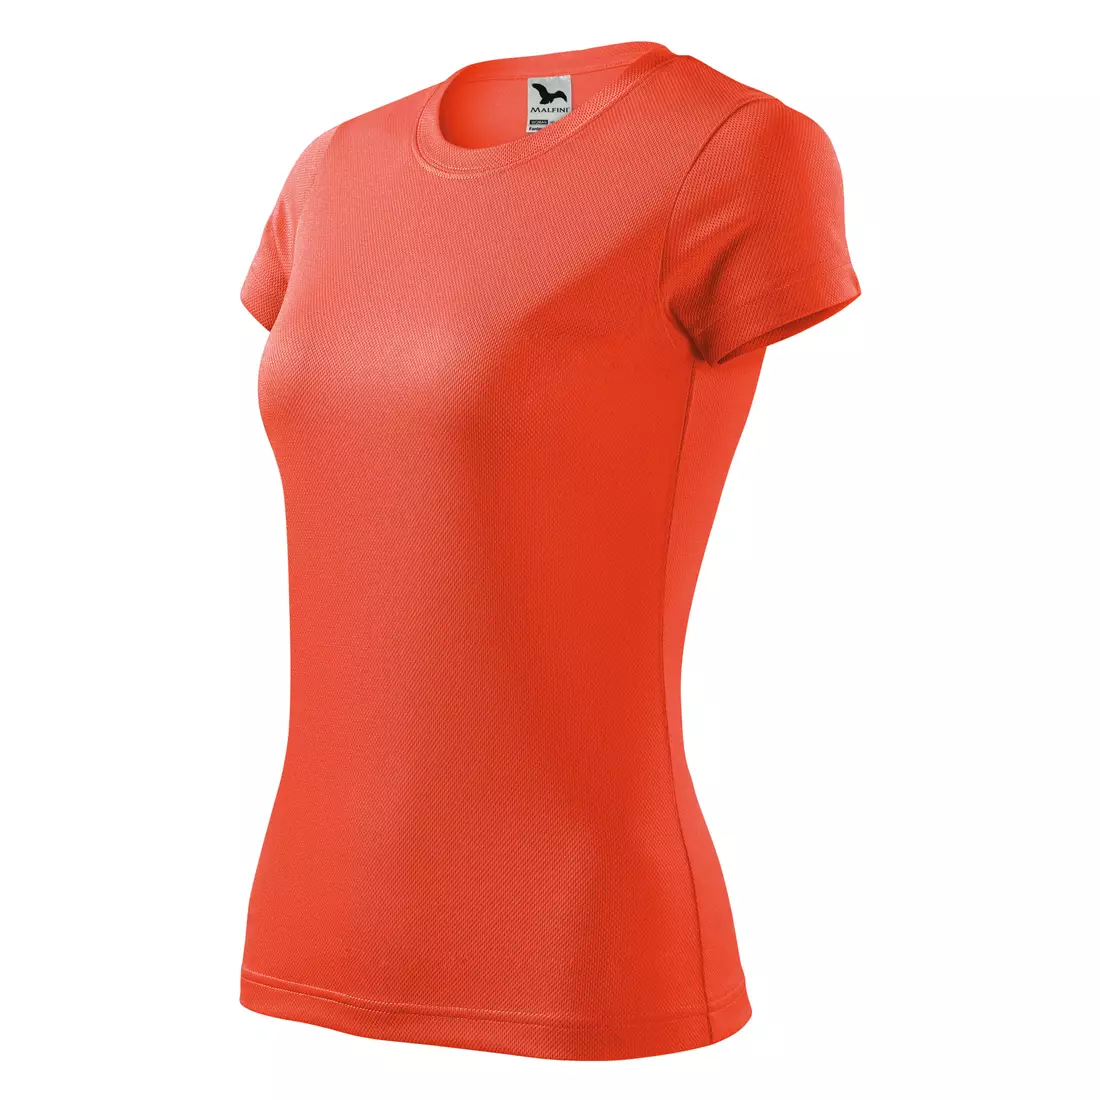 MALFINI FANTASY - Women's Sports T-Shirt 100% Polyester, Neon Orange 1409112-140